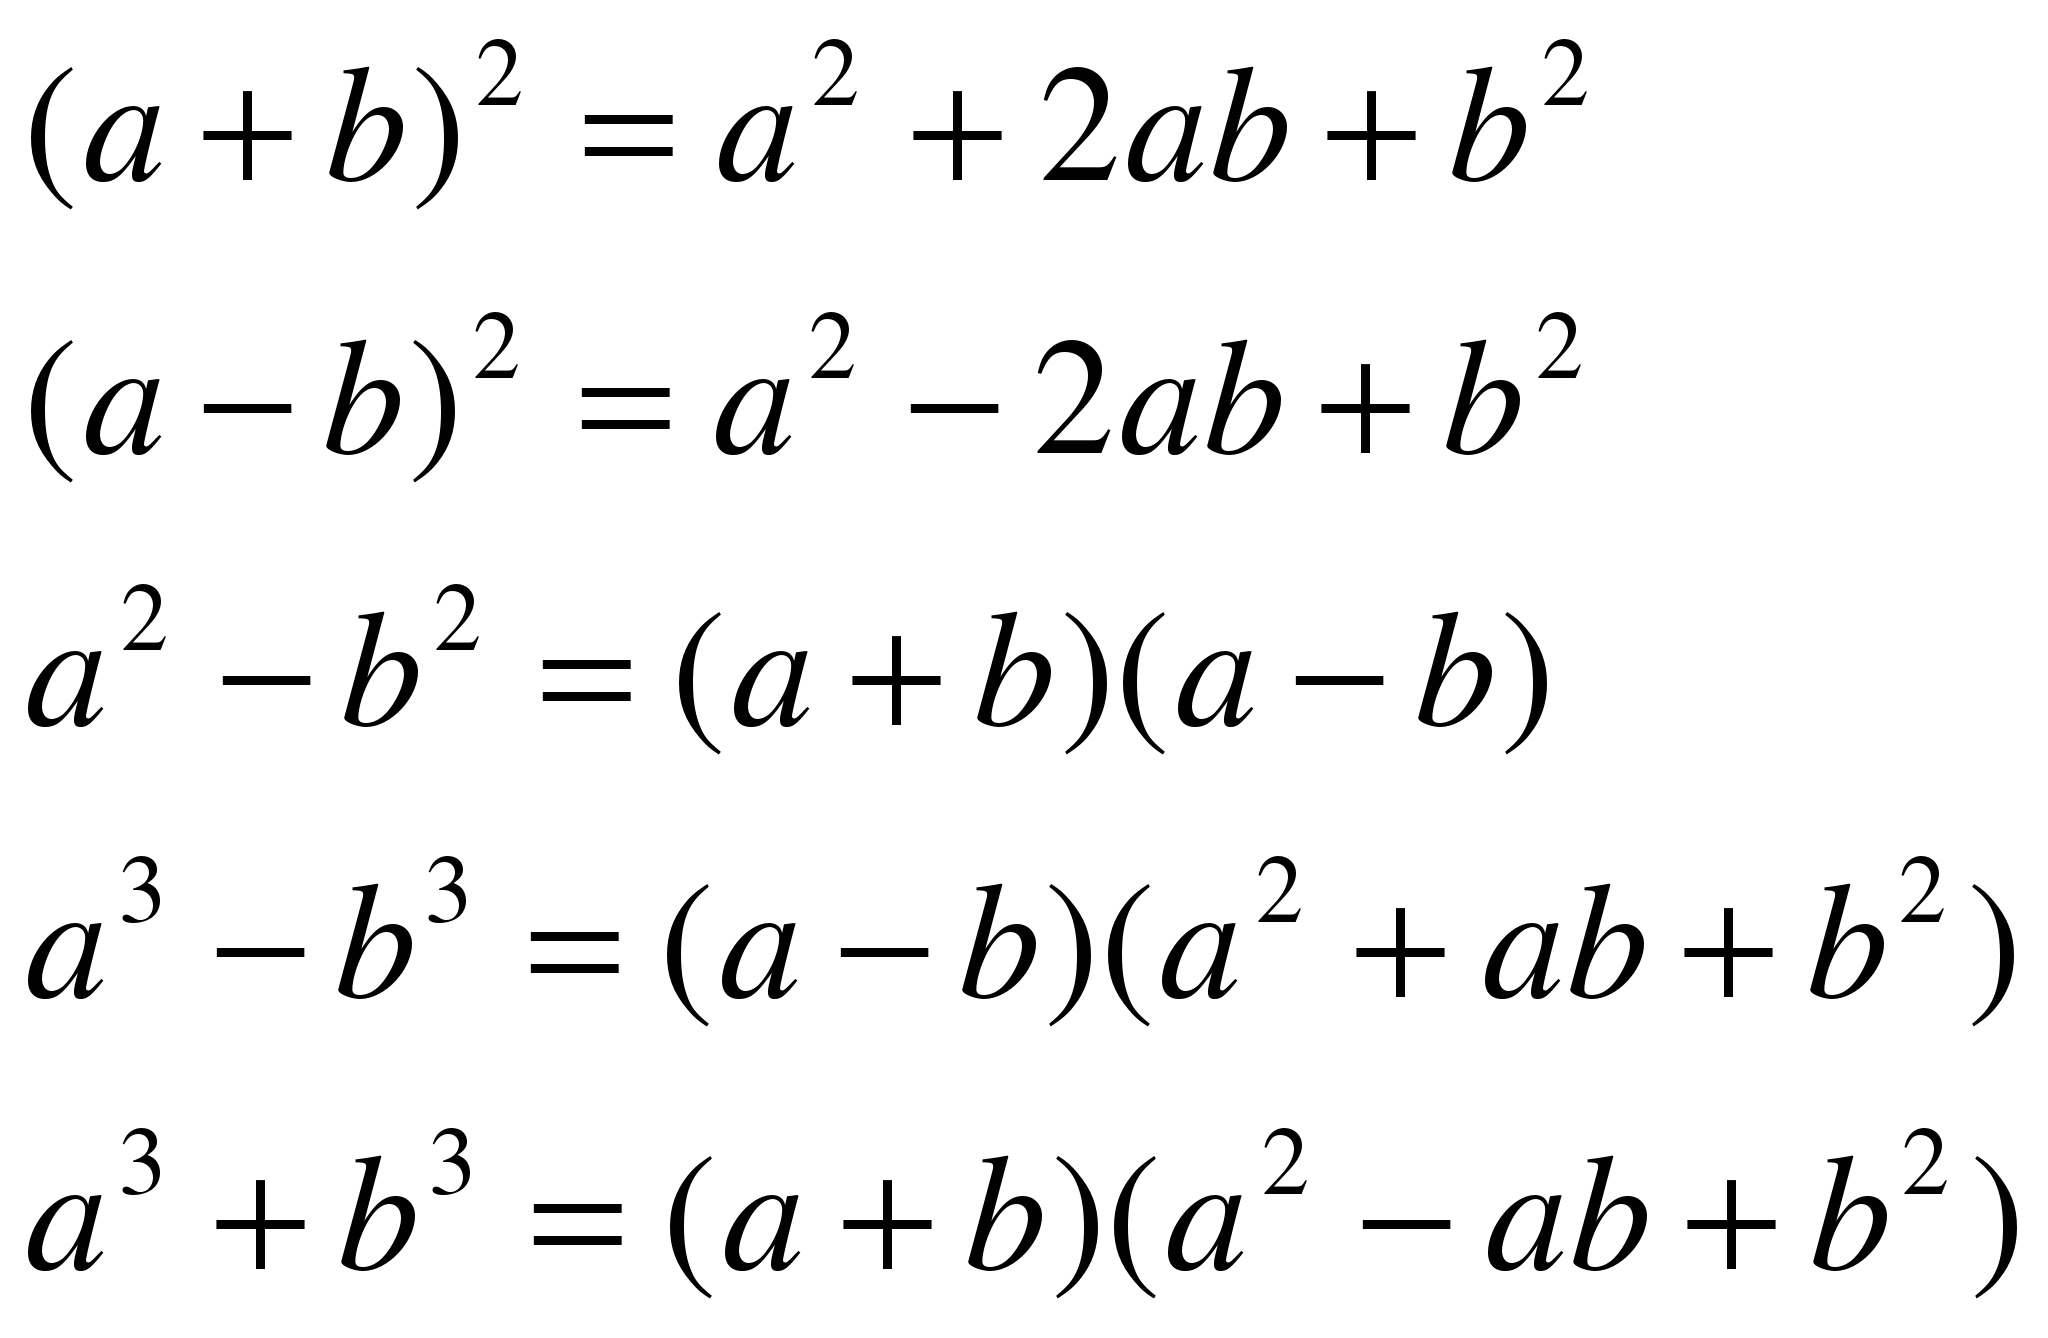 Формула в равно а б ц. А2 б2 формула сокращенного умножения. Формулы сокращенного умножения (a-b)^4. Формулы сокращенного умножения (a-5)(a-2). Формула кубов формулы сокращенного умножения.